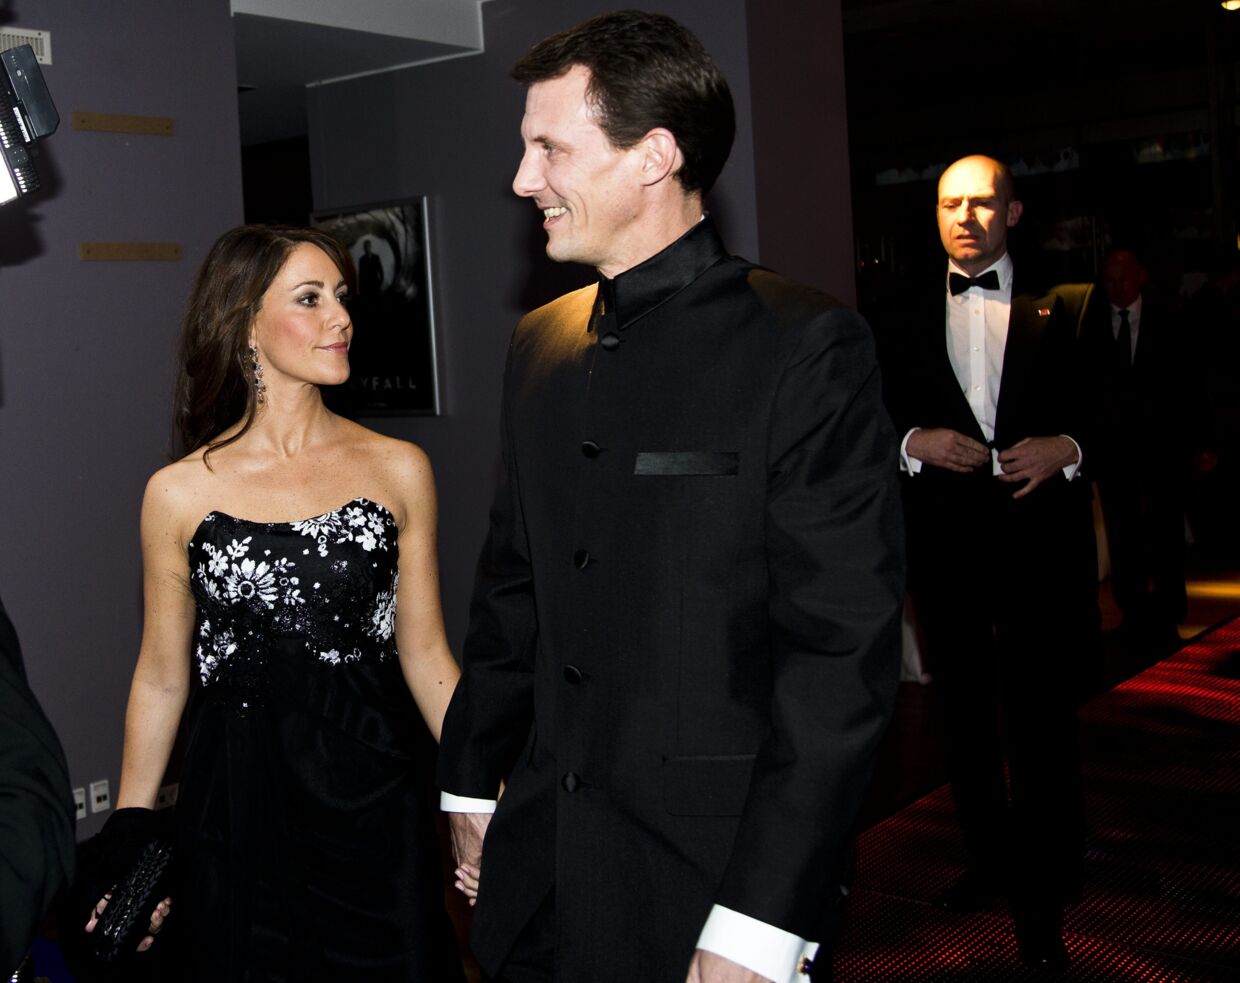 Se og Hør var lige i hælene på prins Joachim og prinsesse Marie. Foto: Martin Sylvest